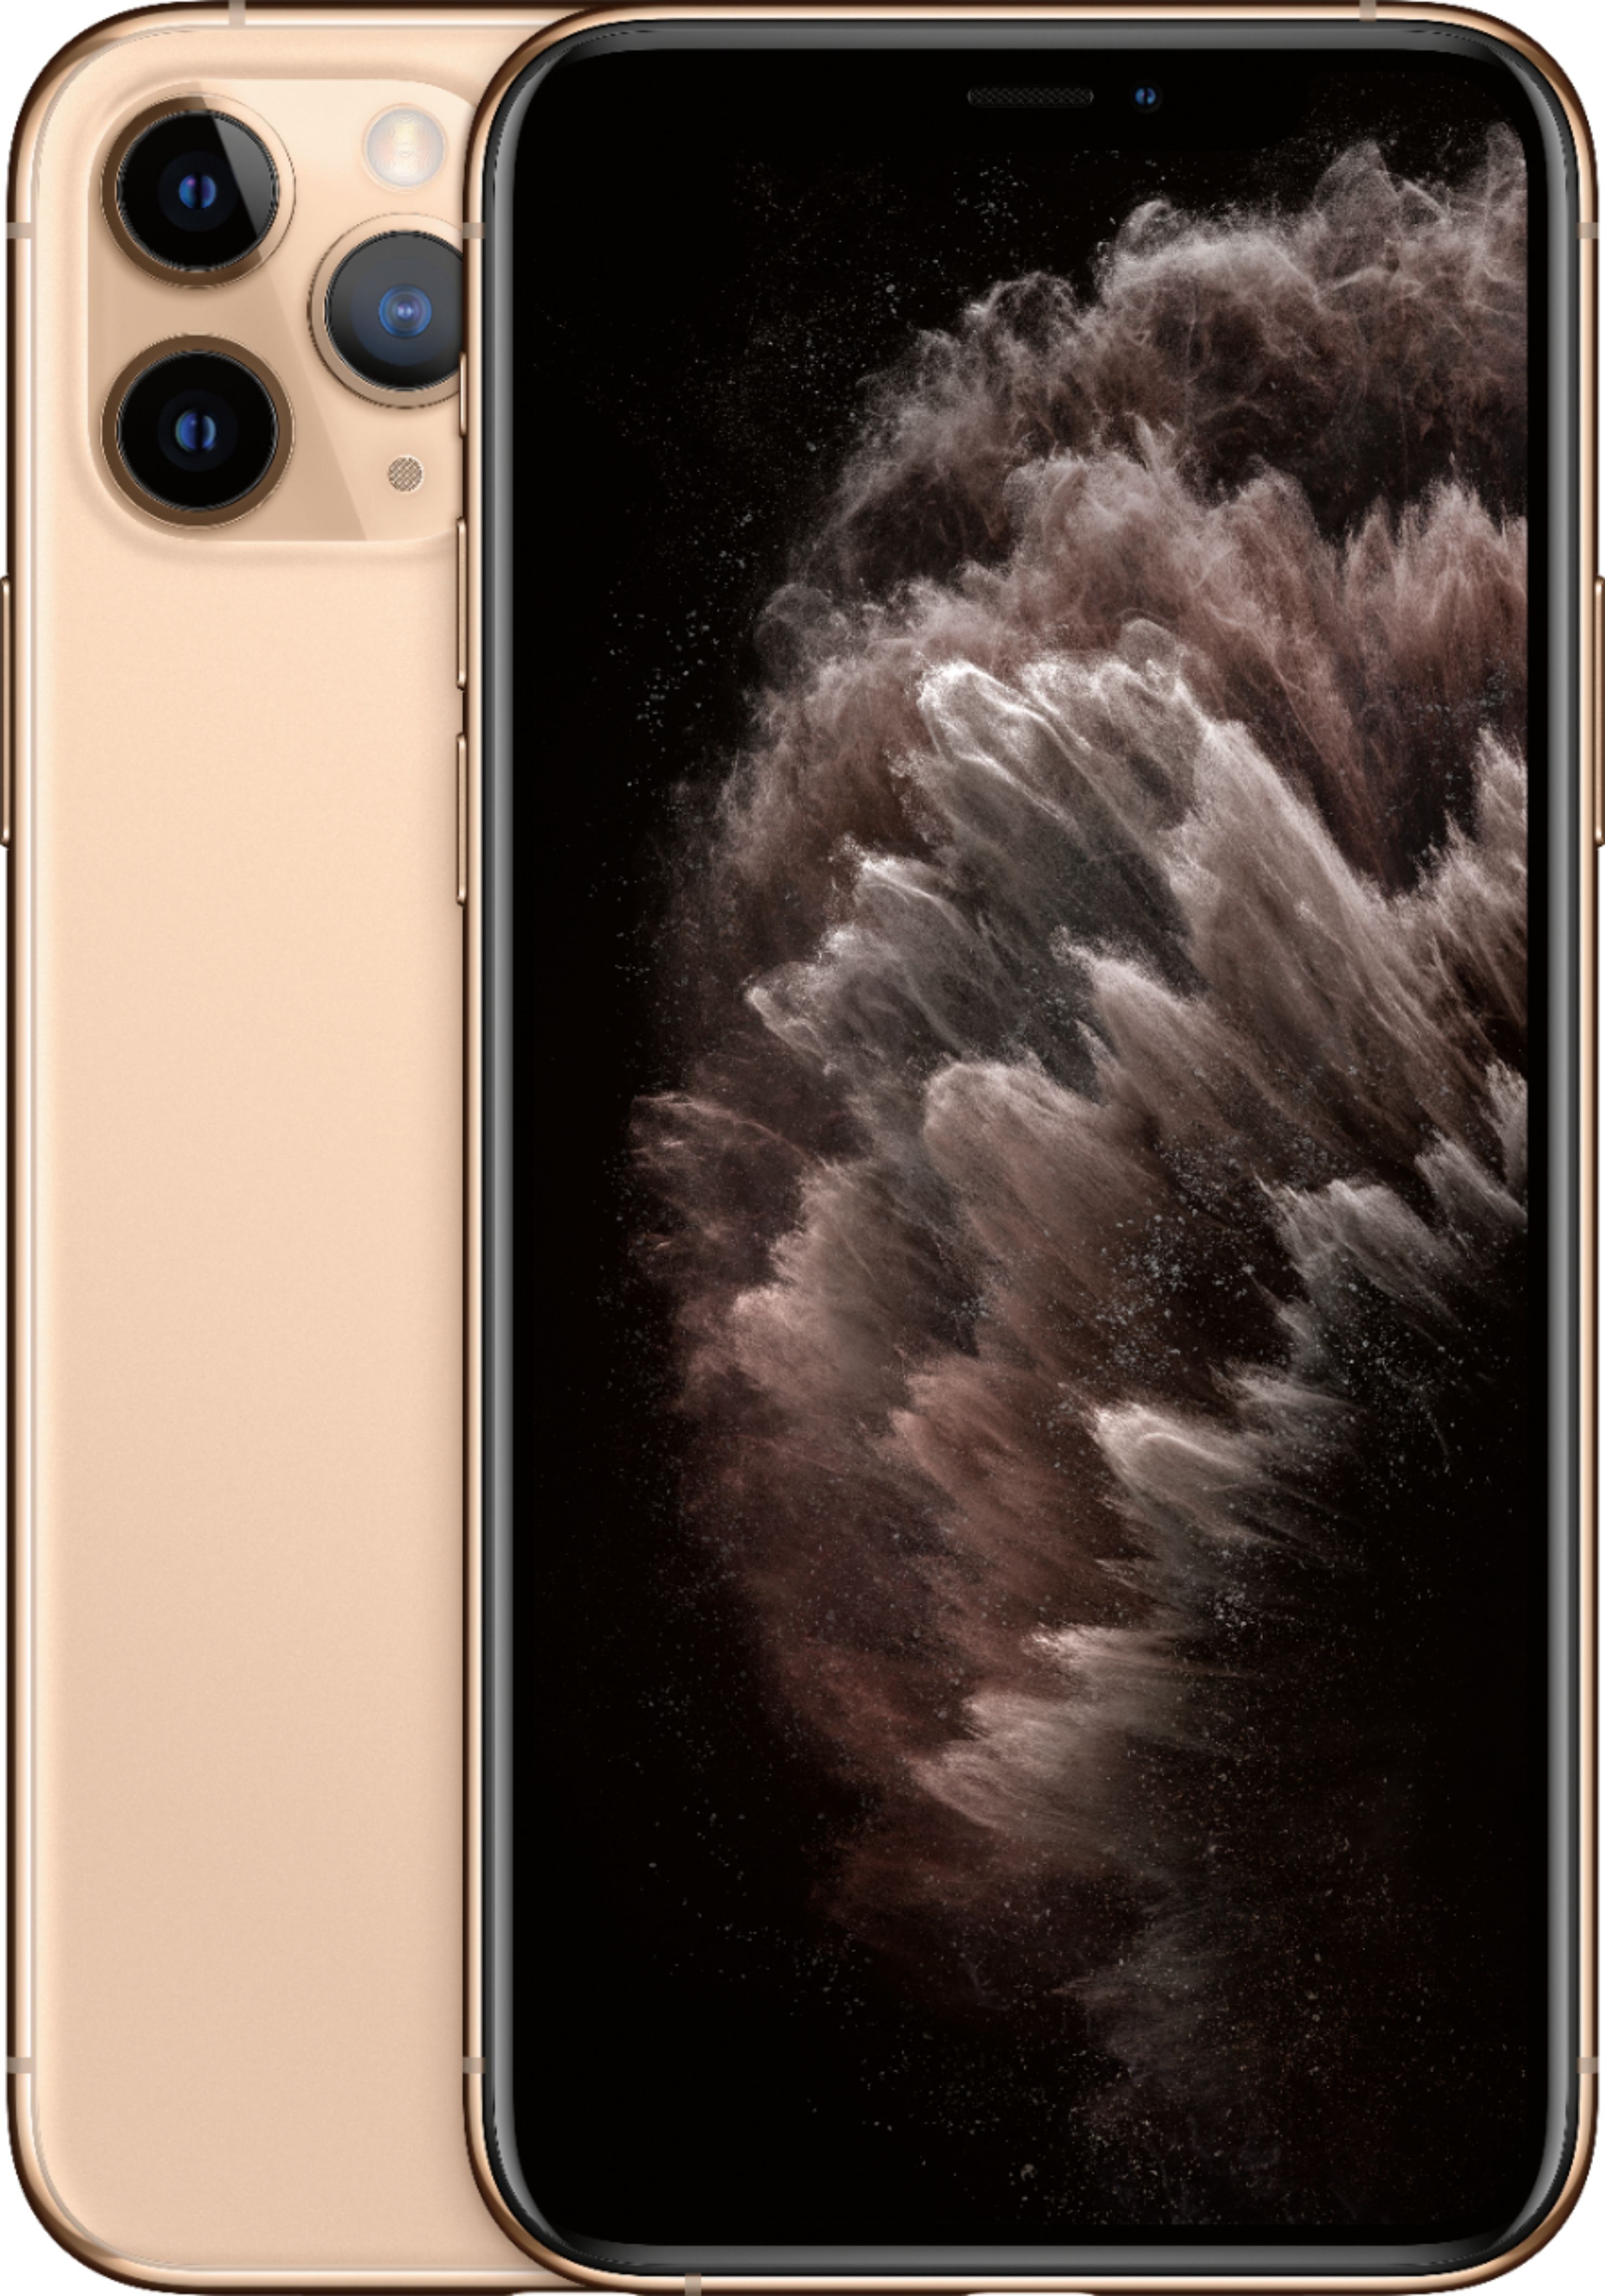 Apple iPhone 11 Pro 256GB Gold (Unlocked) MWAV2LL/A - Best Buy